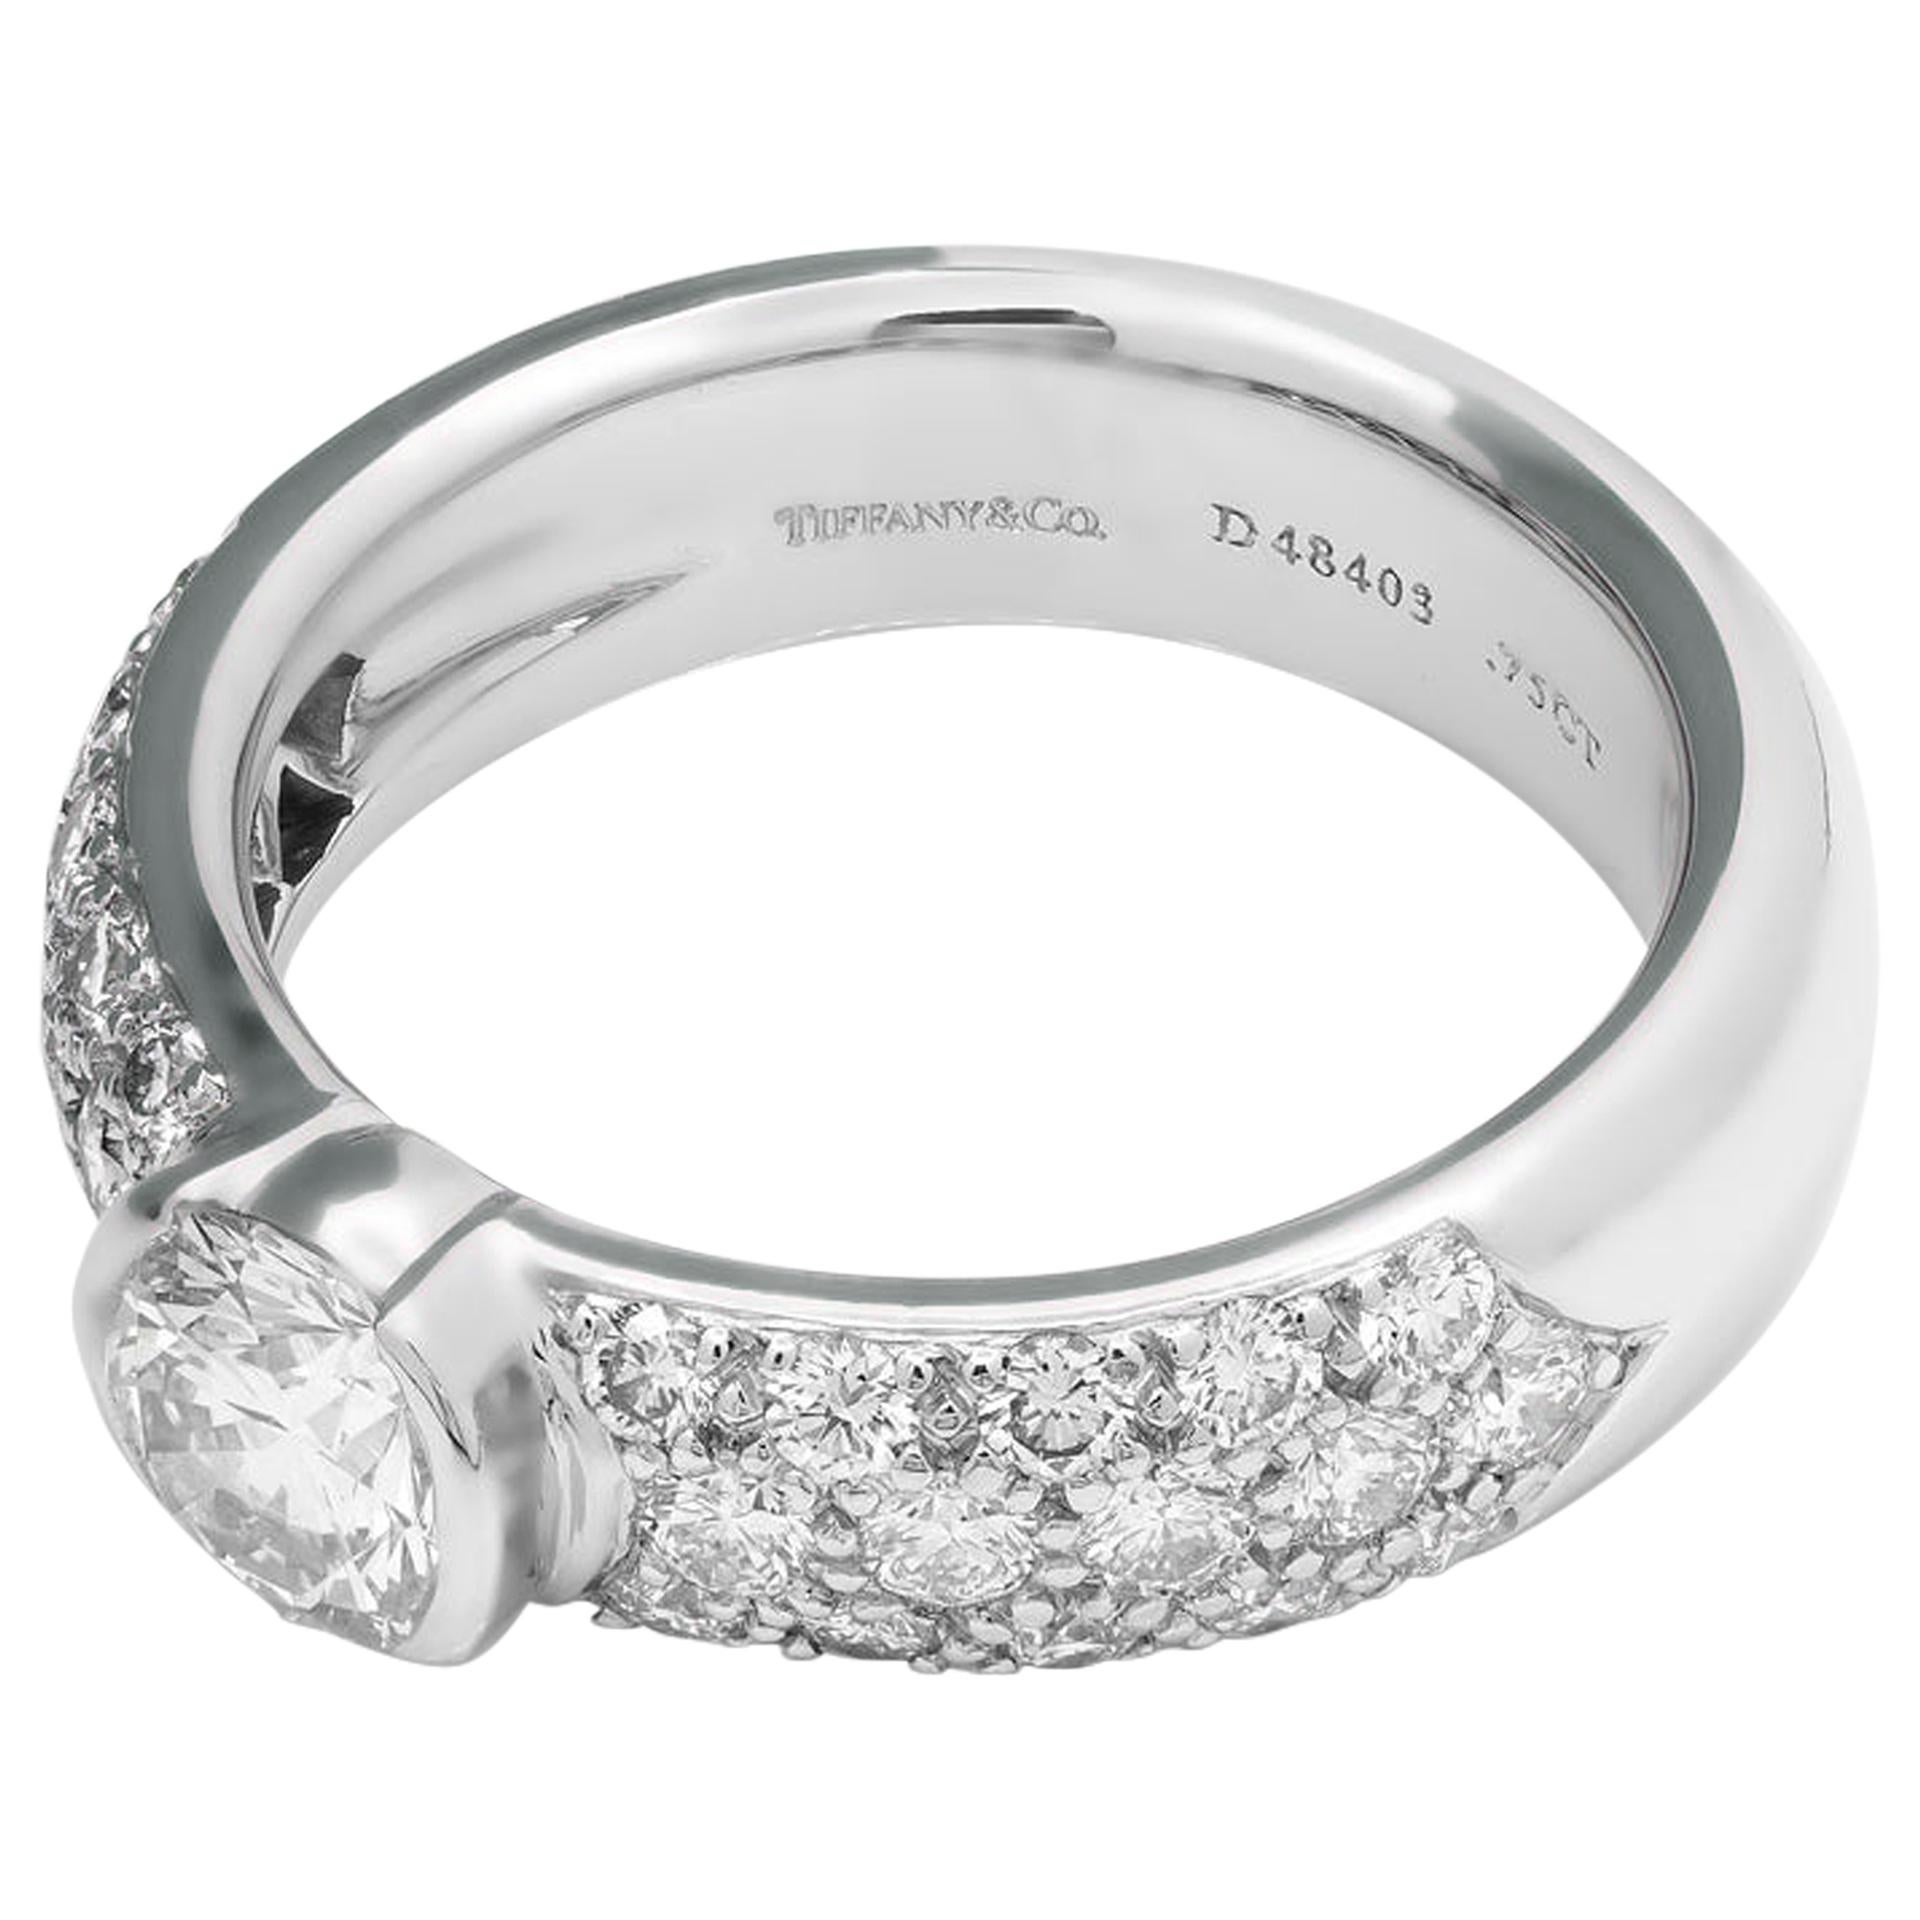 Tiffany And Co Etoile Diamond Ring At 1stdibs Tiffany Etoile